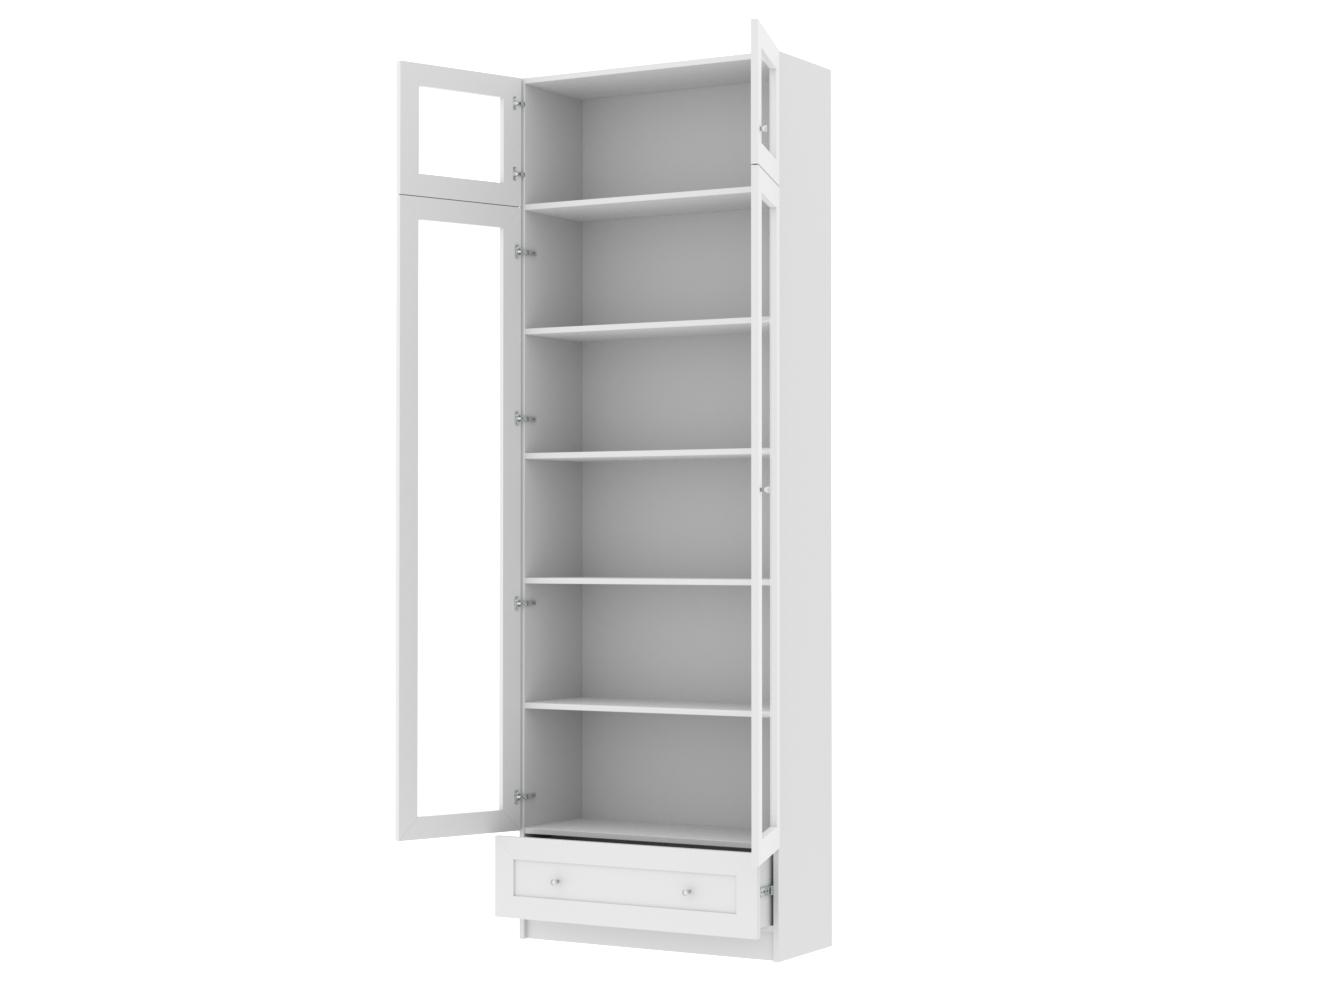  Книжный шкаф Билли 322 white ИКЕА (IKEA) изображение товара